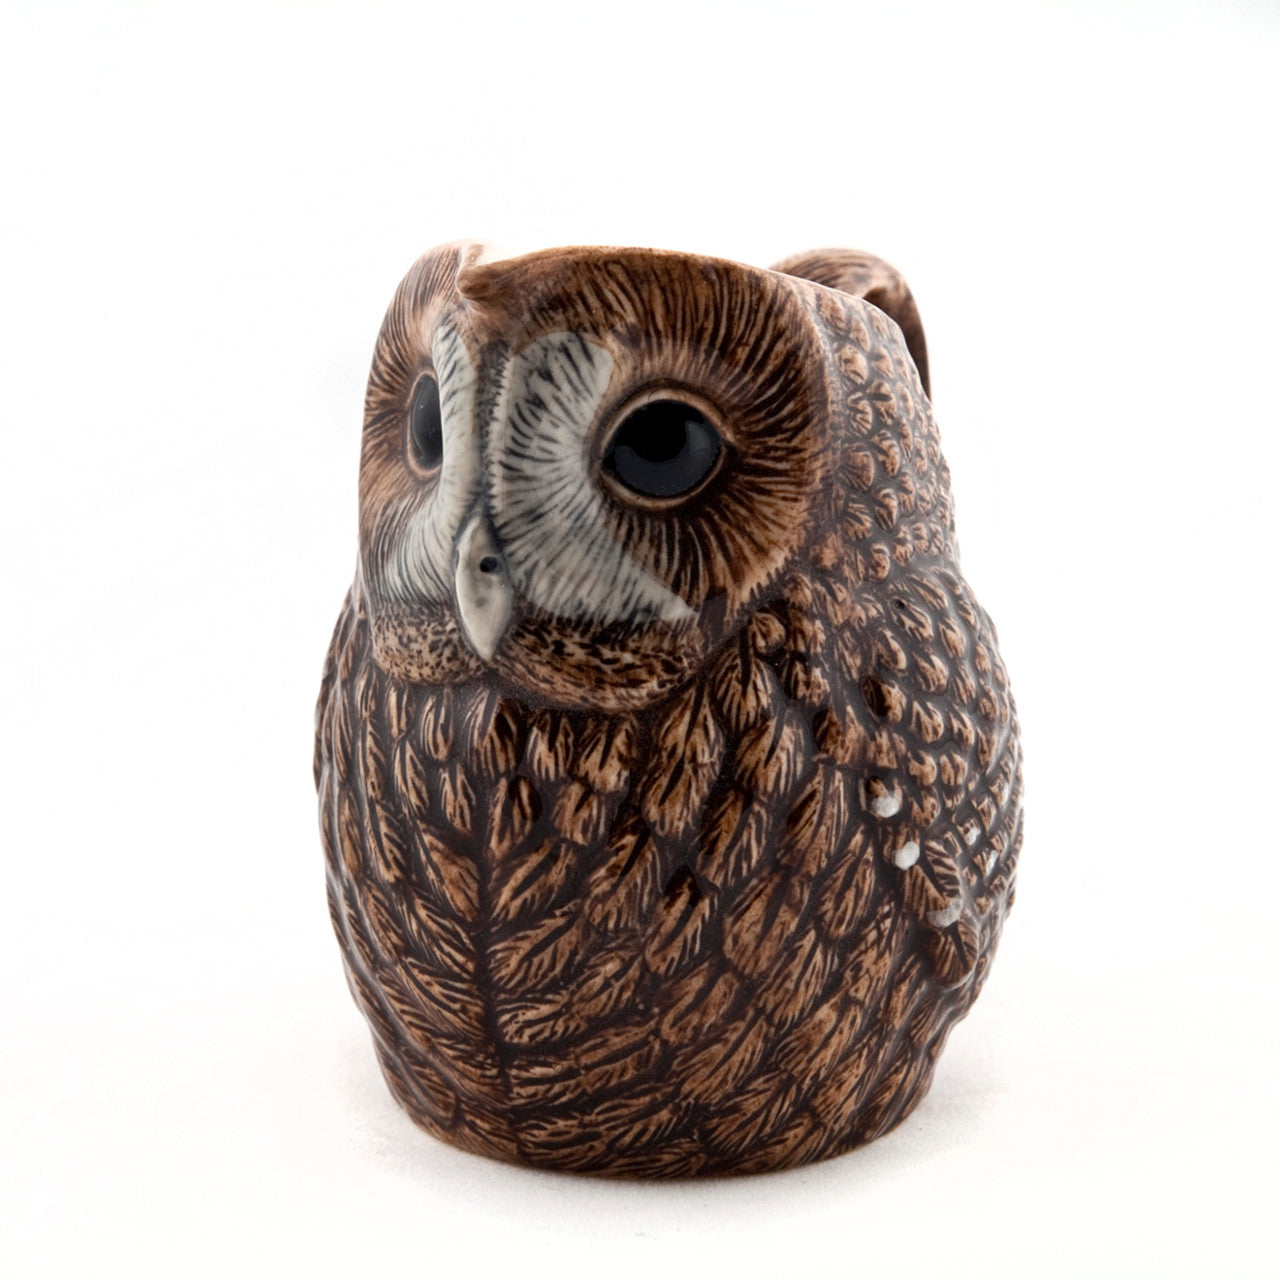 A Woodland Animal Jugs mug, featuring a traditional British design, from Quail Ceramics.